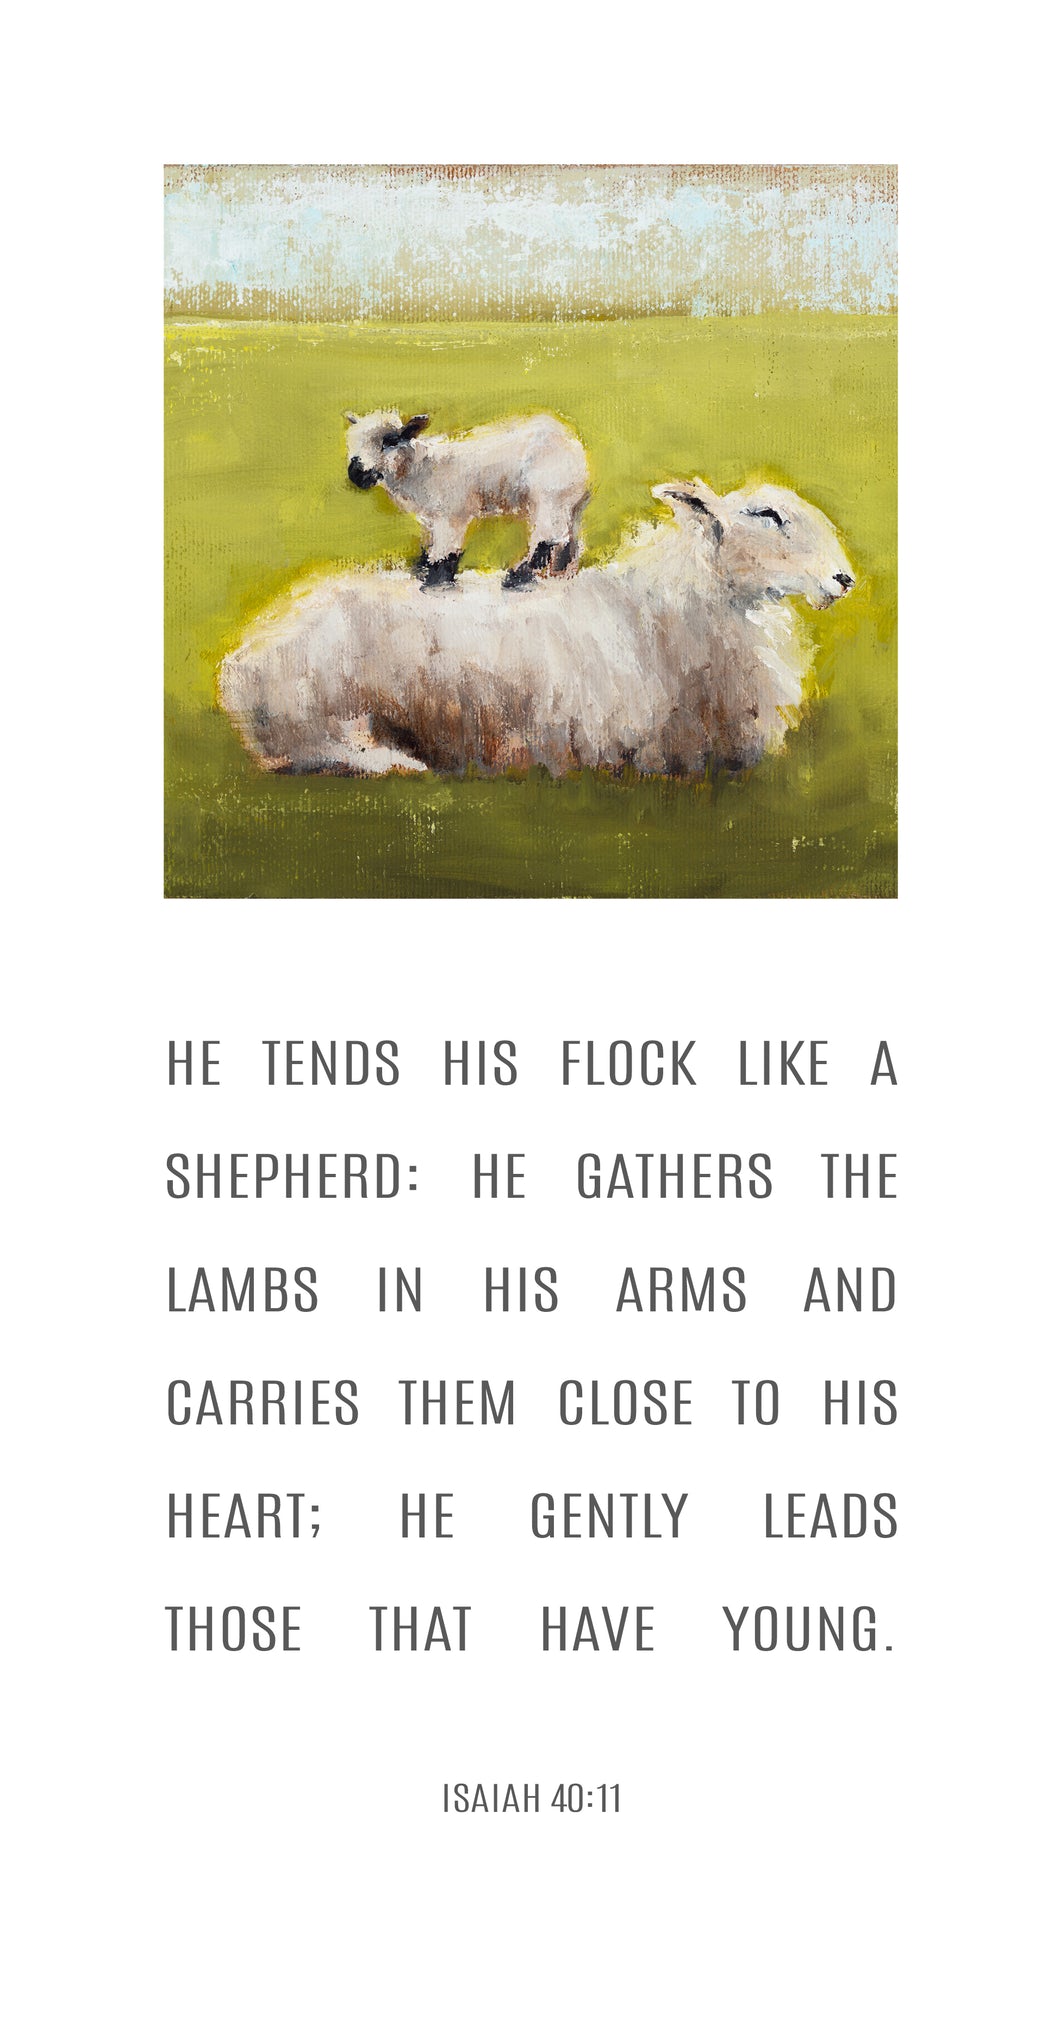 Ewe and Me - Isaiah 40:11